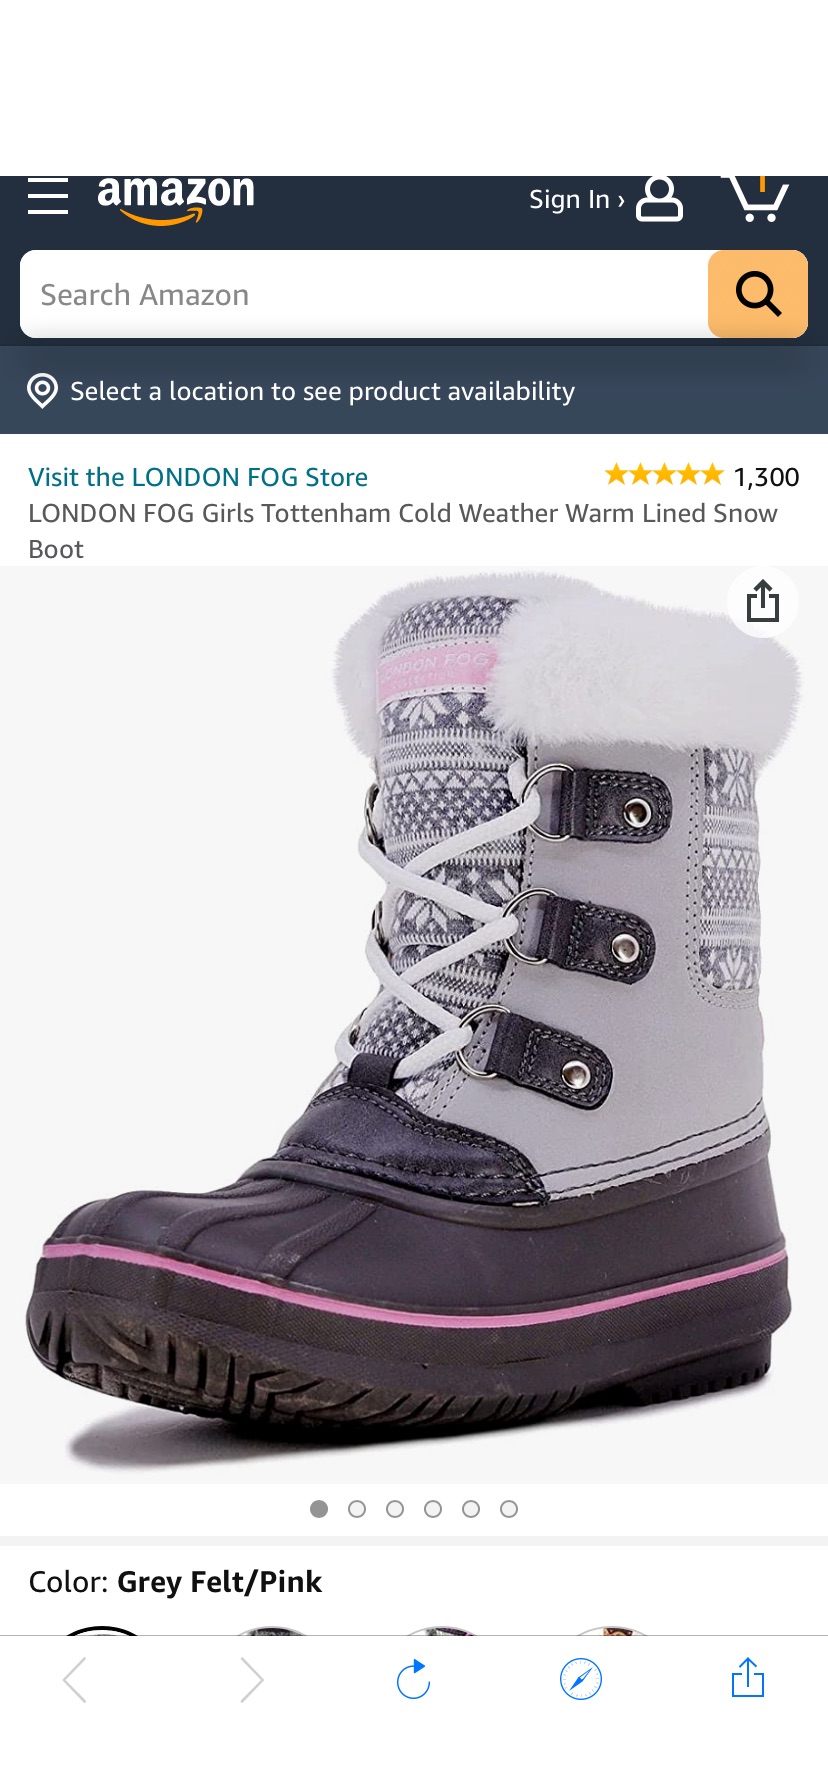 Amazon.com | LONDON FOG Girls Tottenham Cold Weather Snow Boot GREY FELT/PINK Size 2 | Snow Boots雪地靴